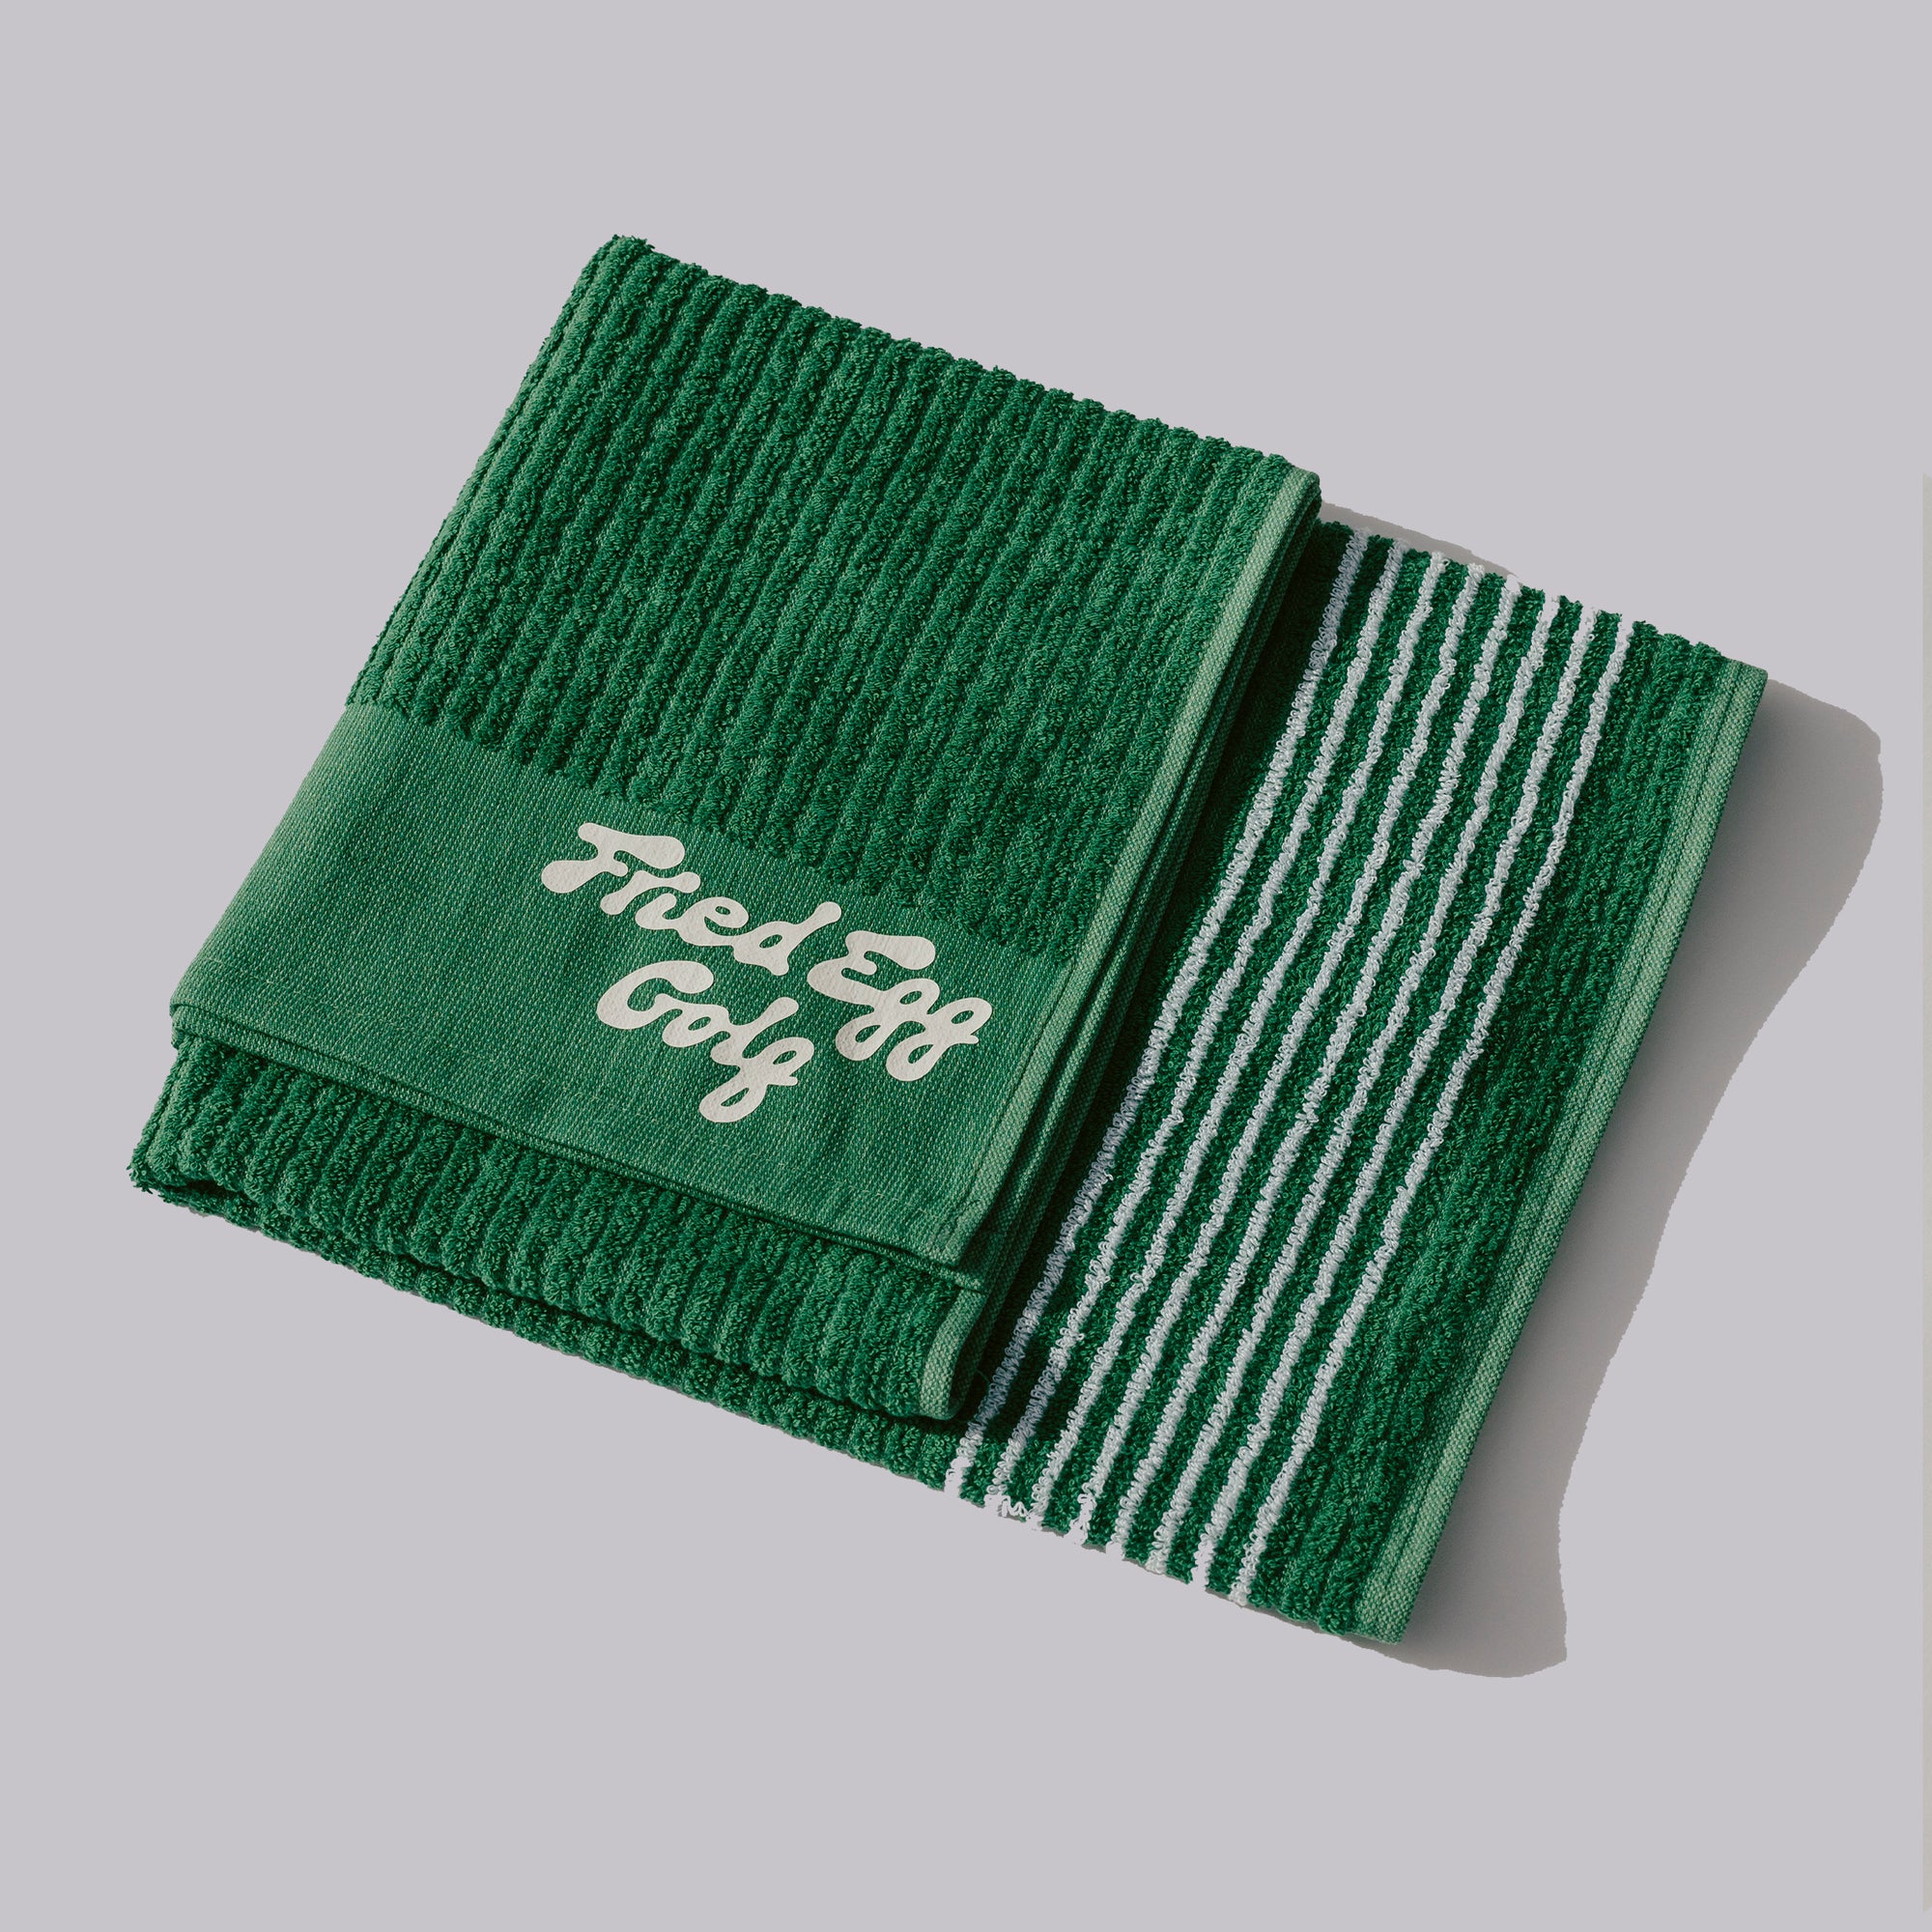 Fried Egg Golf Towel - Green